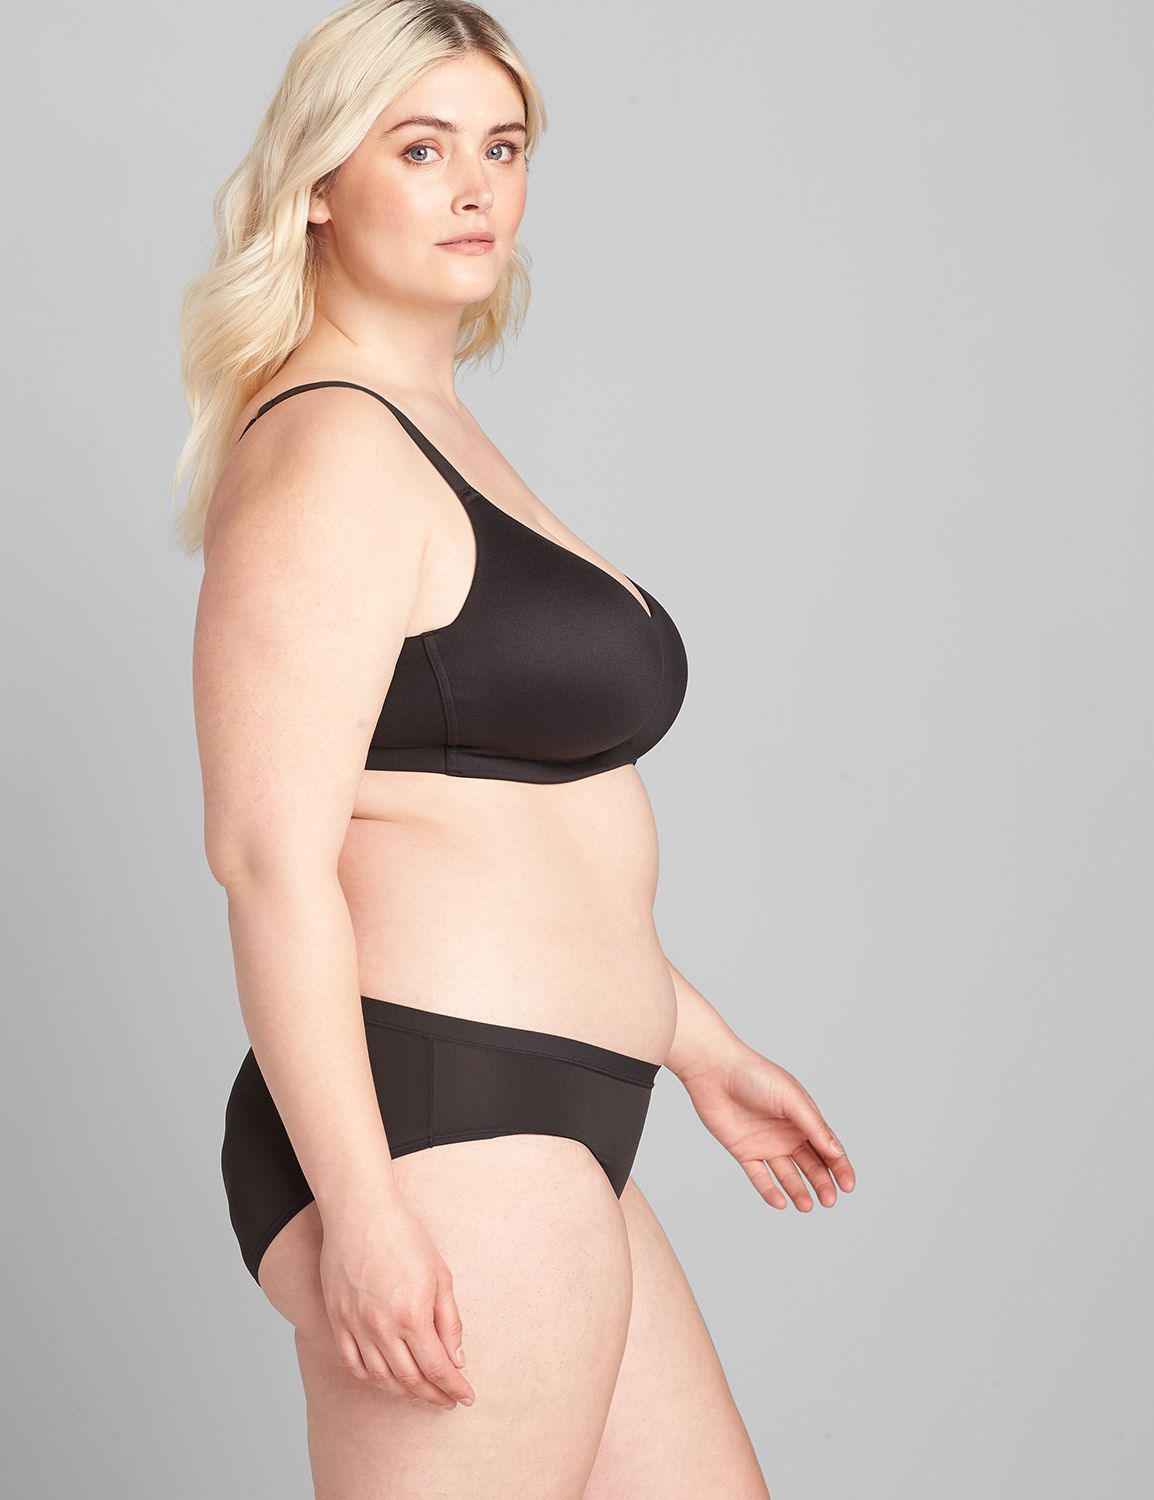 Lane Bryant - New Cacique Mastectomy Bras. 💗 We designed each bra